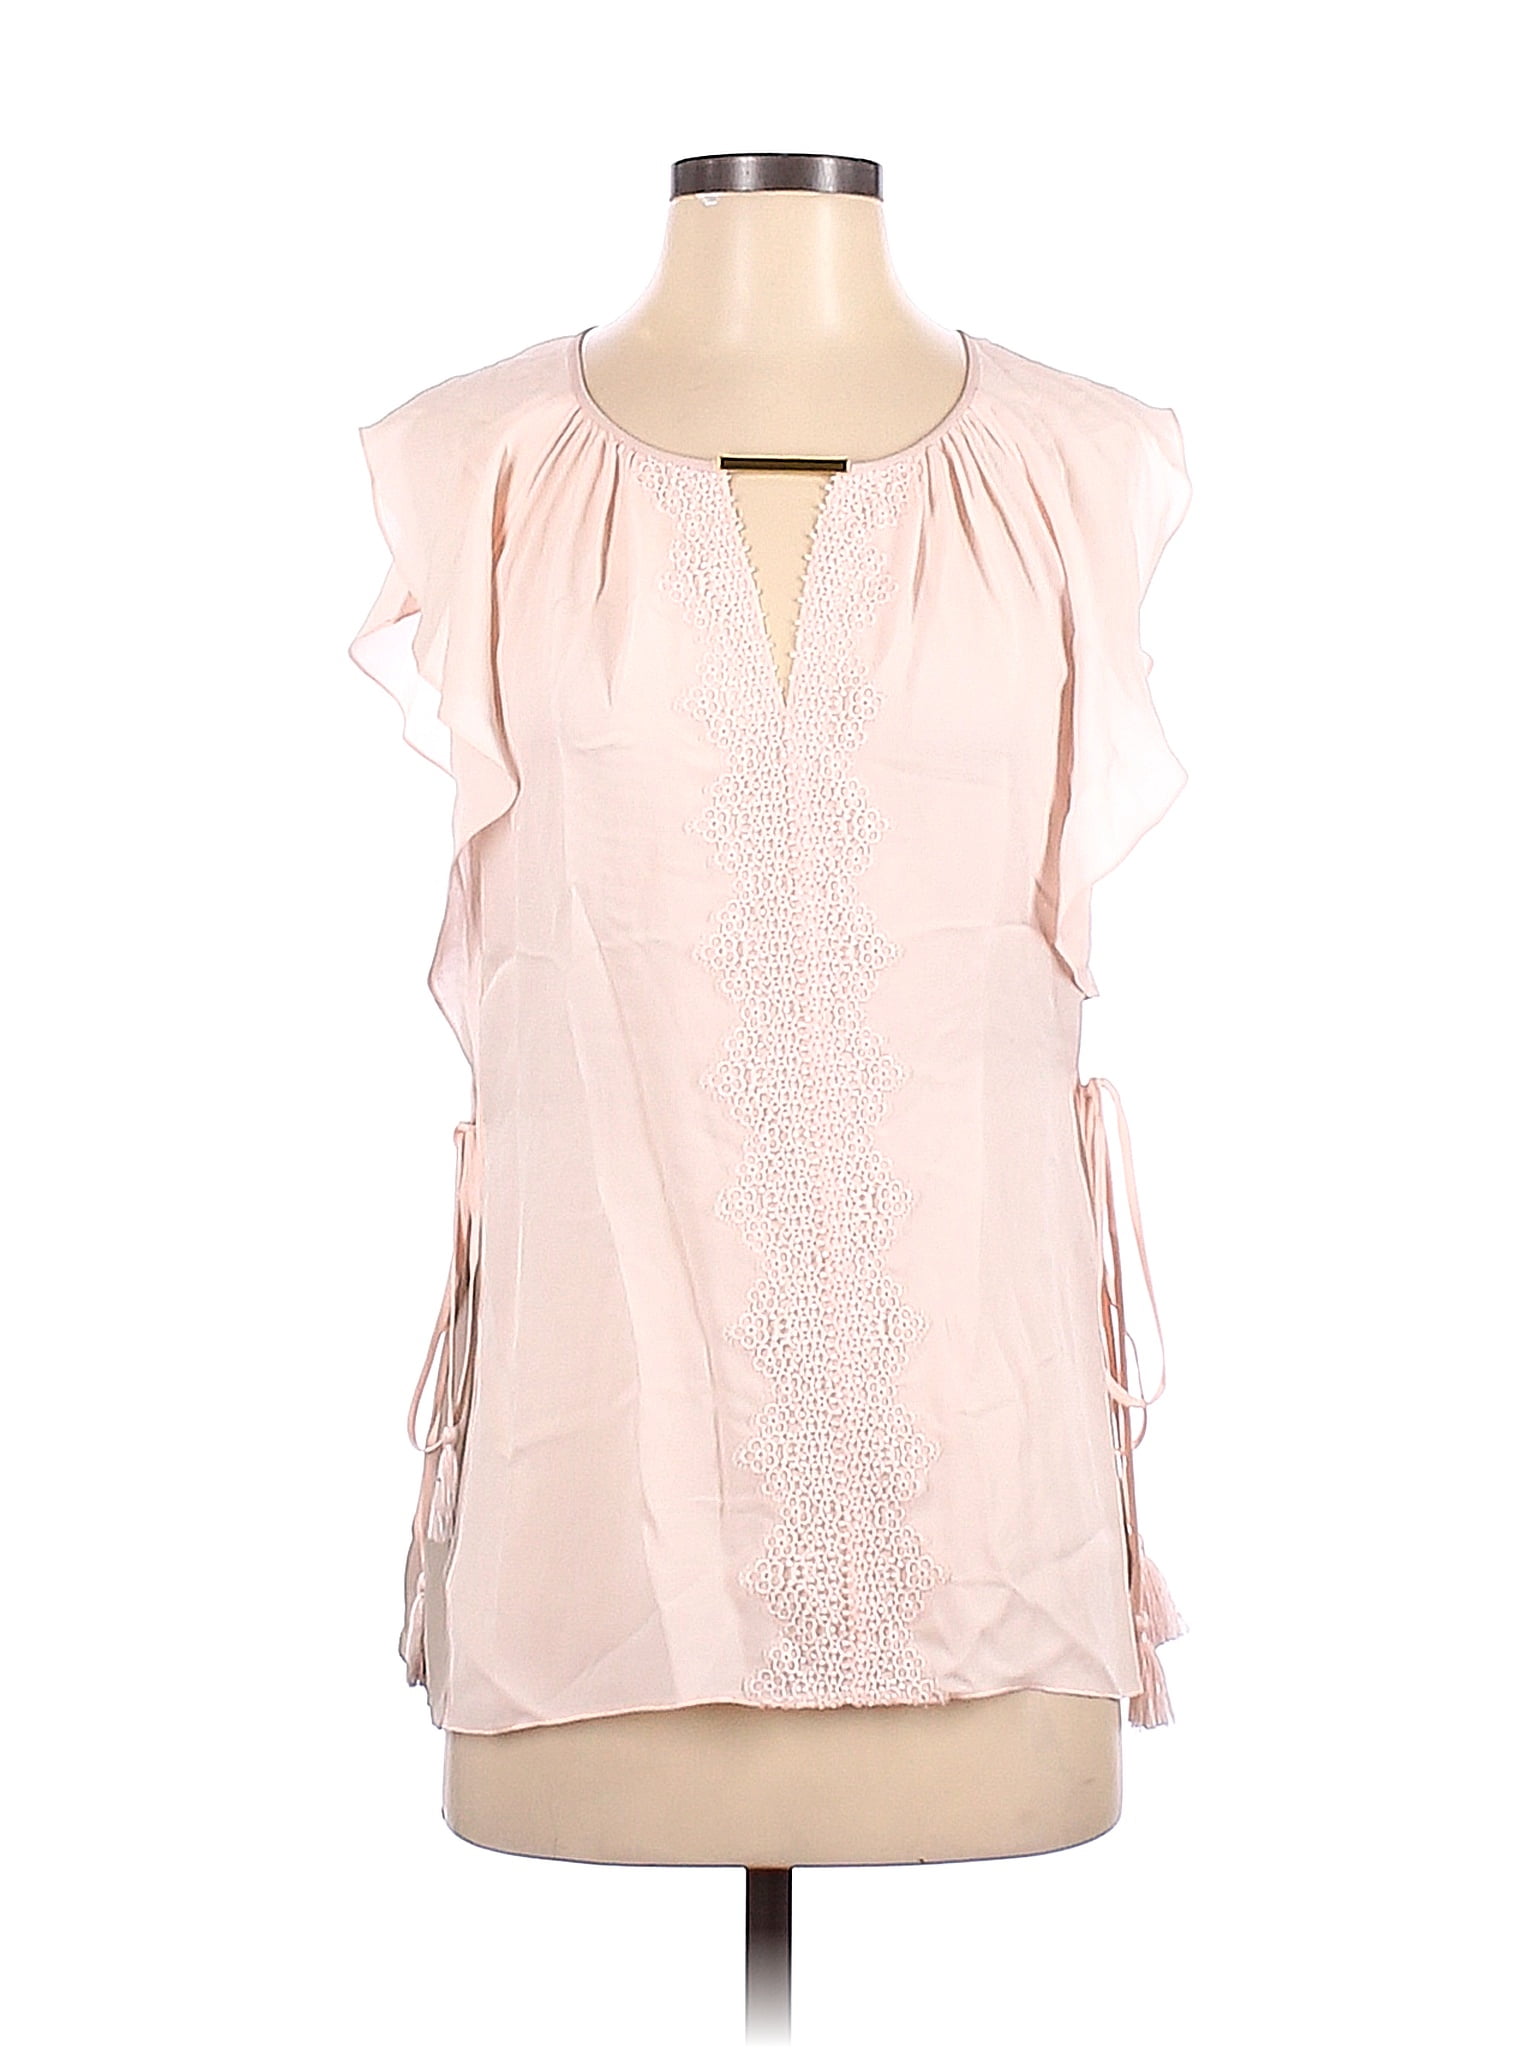 Elie Tahari 100% Silk Pink Short Sleeve Silk Top Size S - 83% off | thredUP